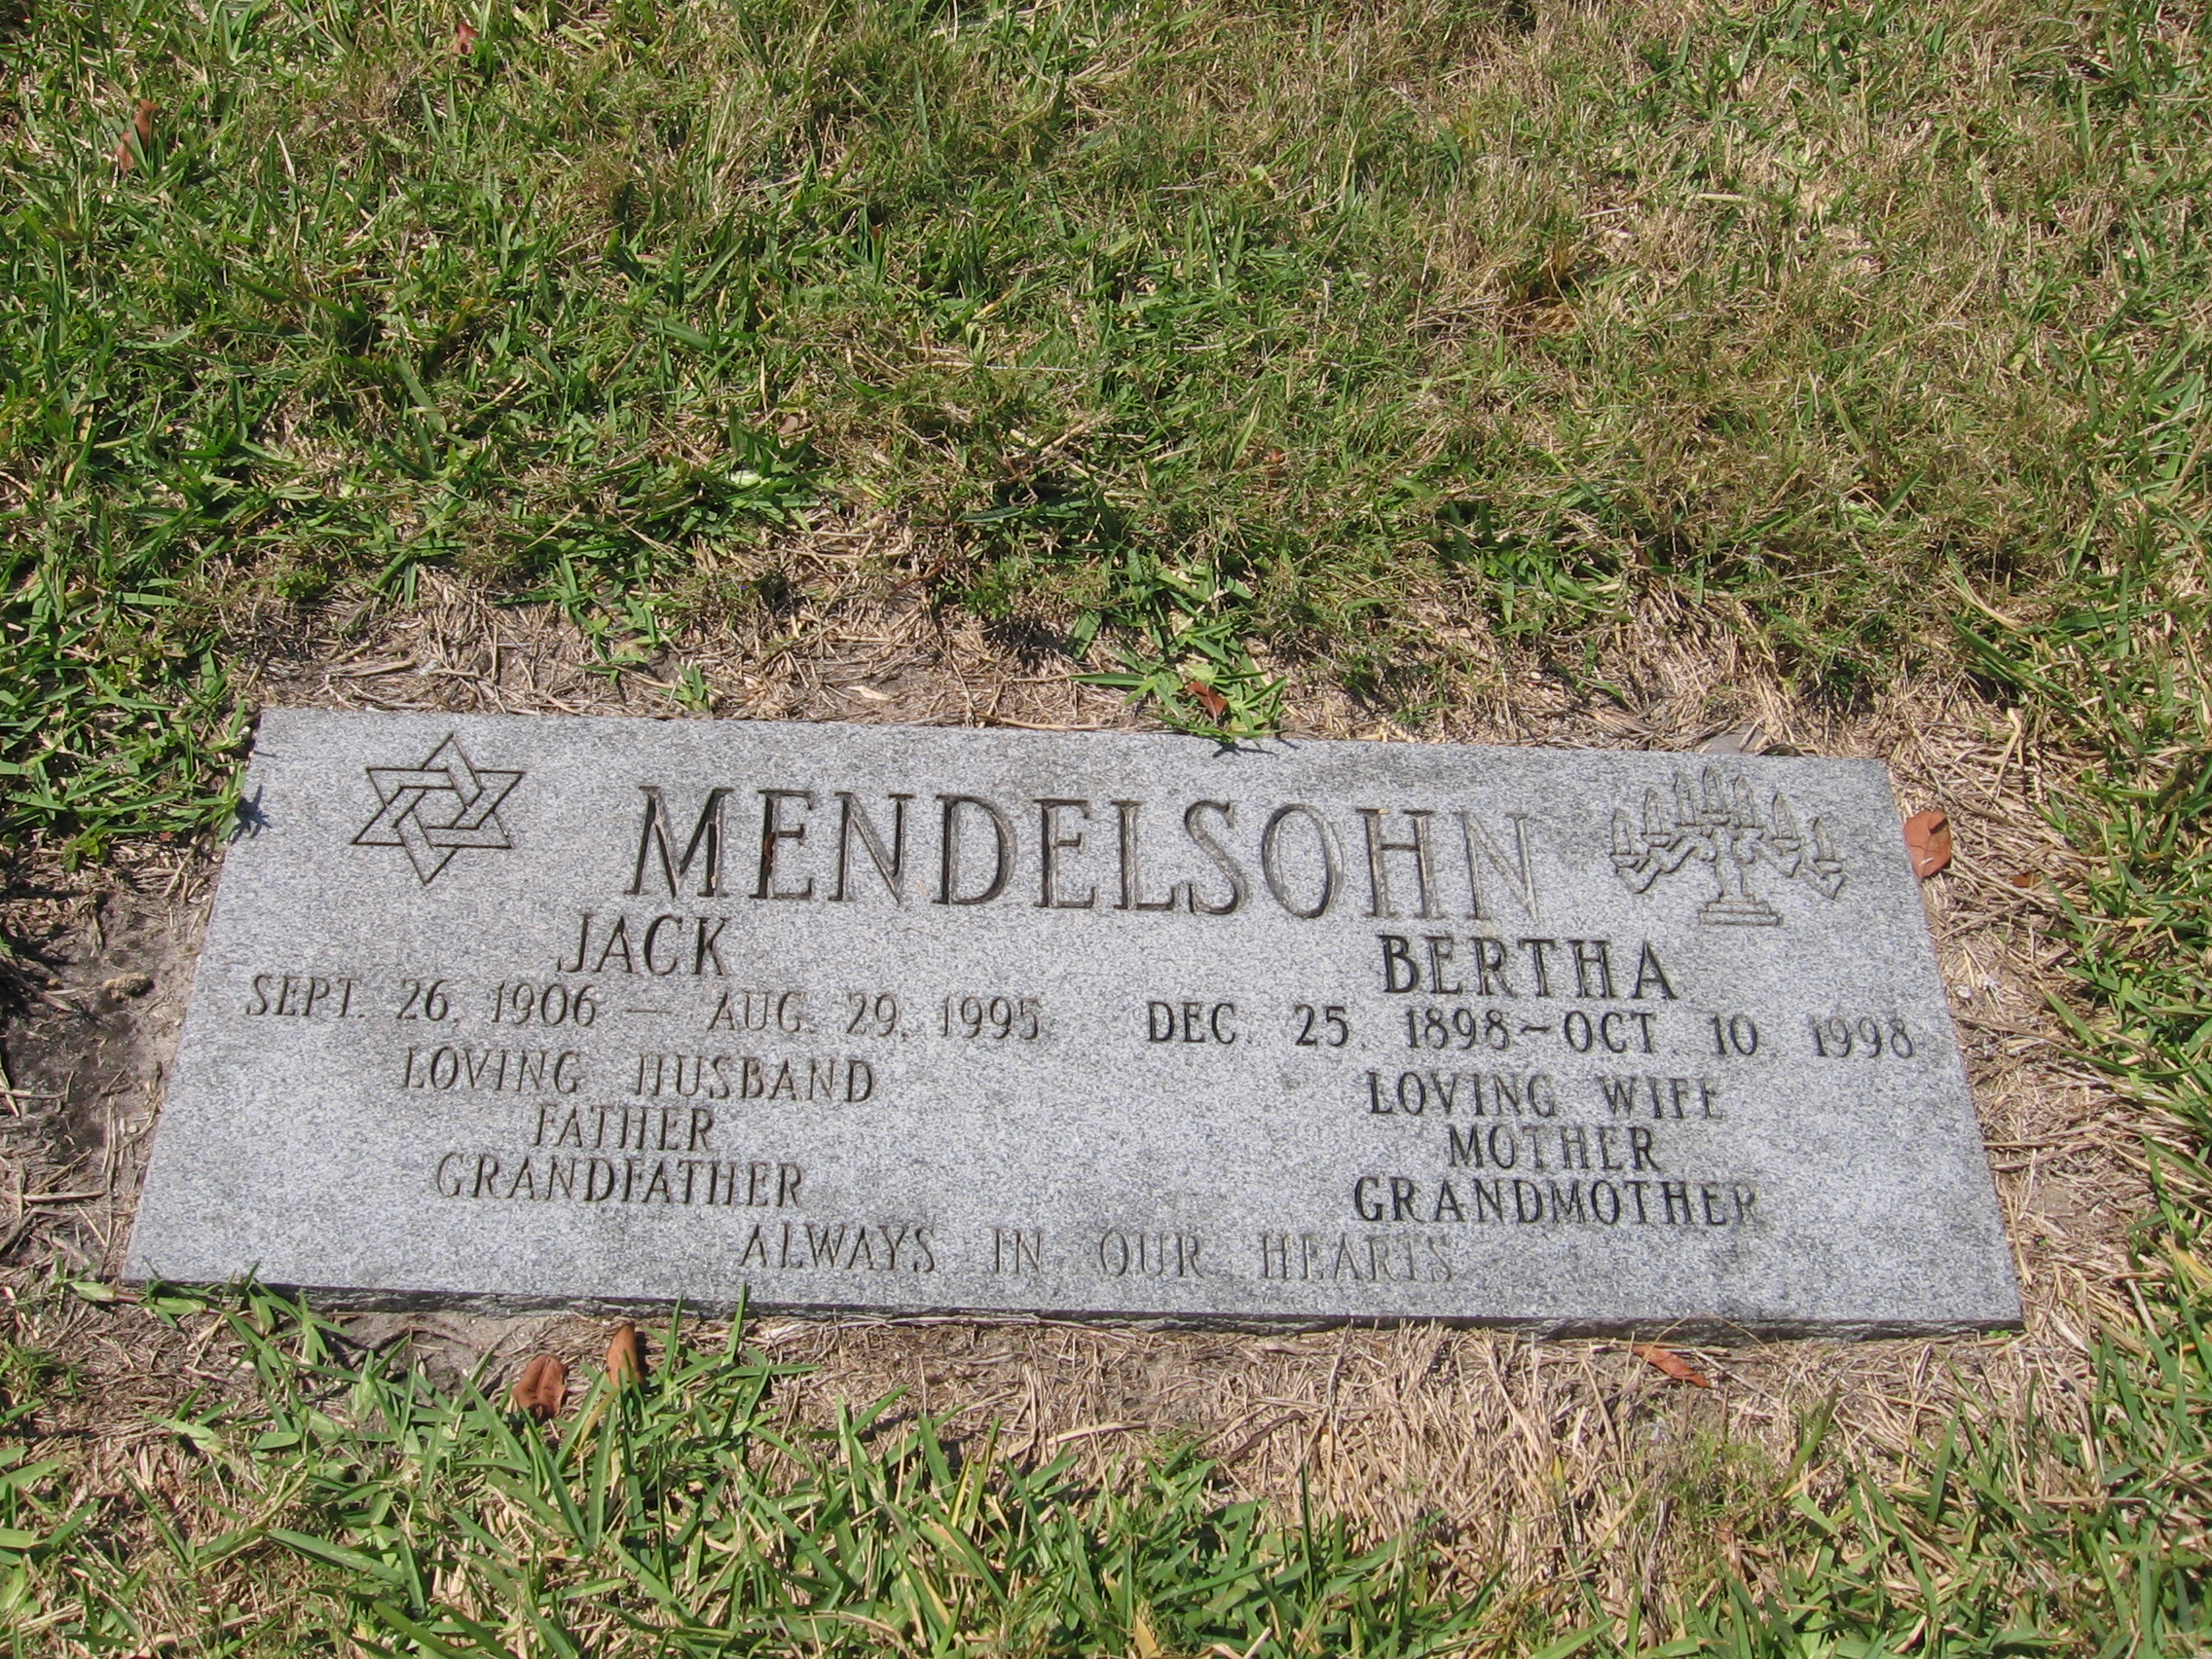 Bertha Mendelsohn